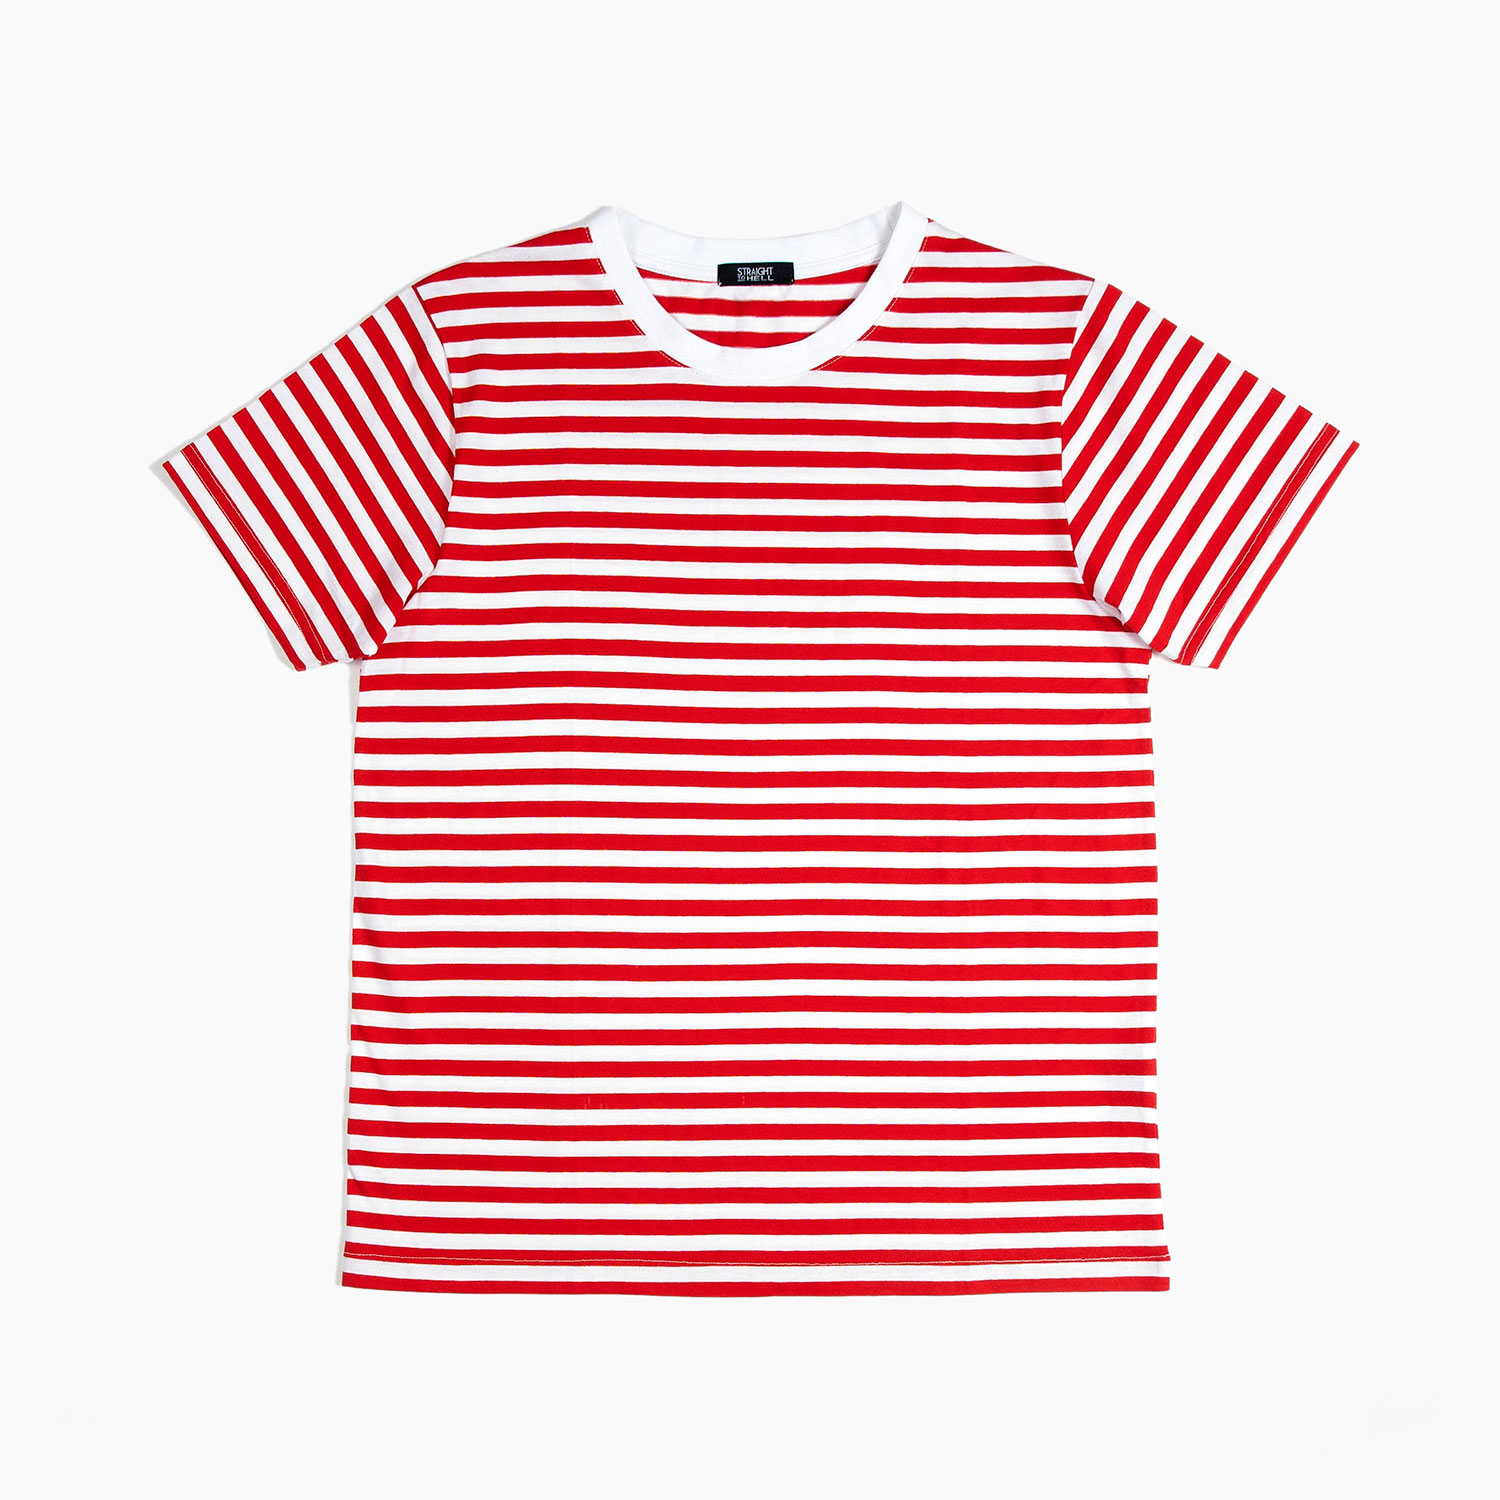 Jasper - White and Red Striped T-Shirt (Size XS, S, M, L, XL, 2XL